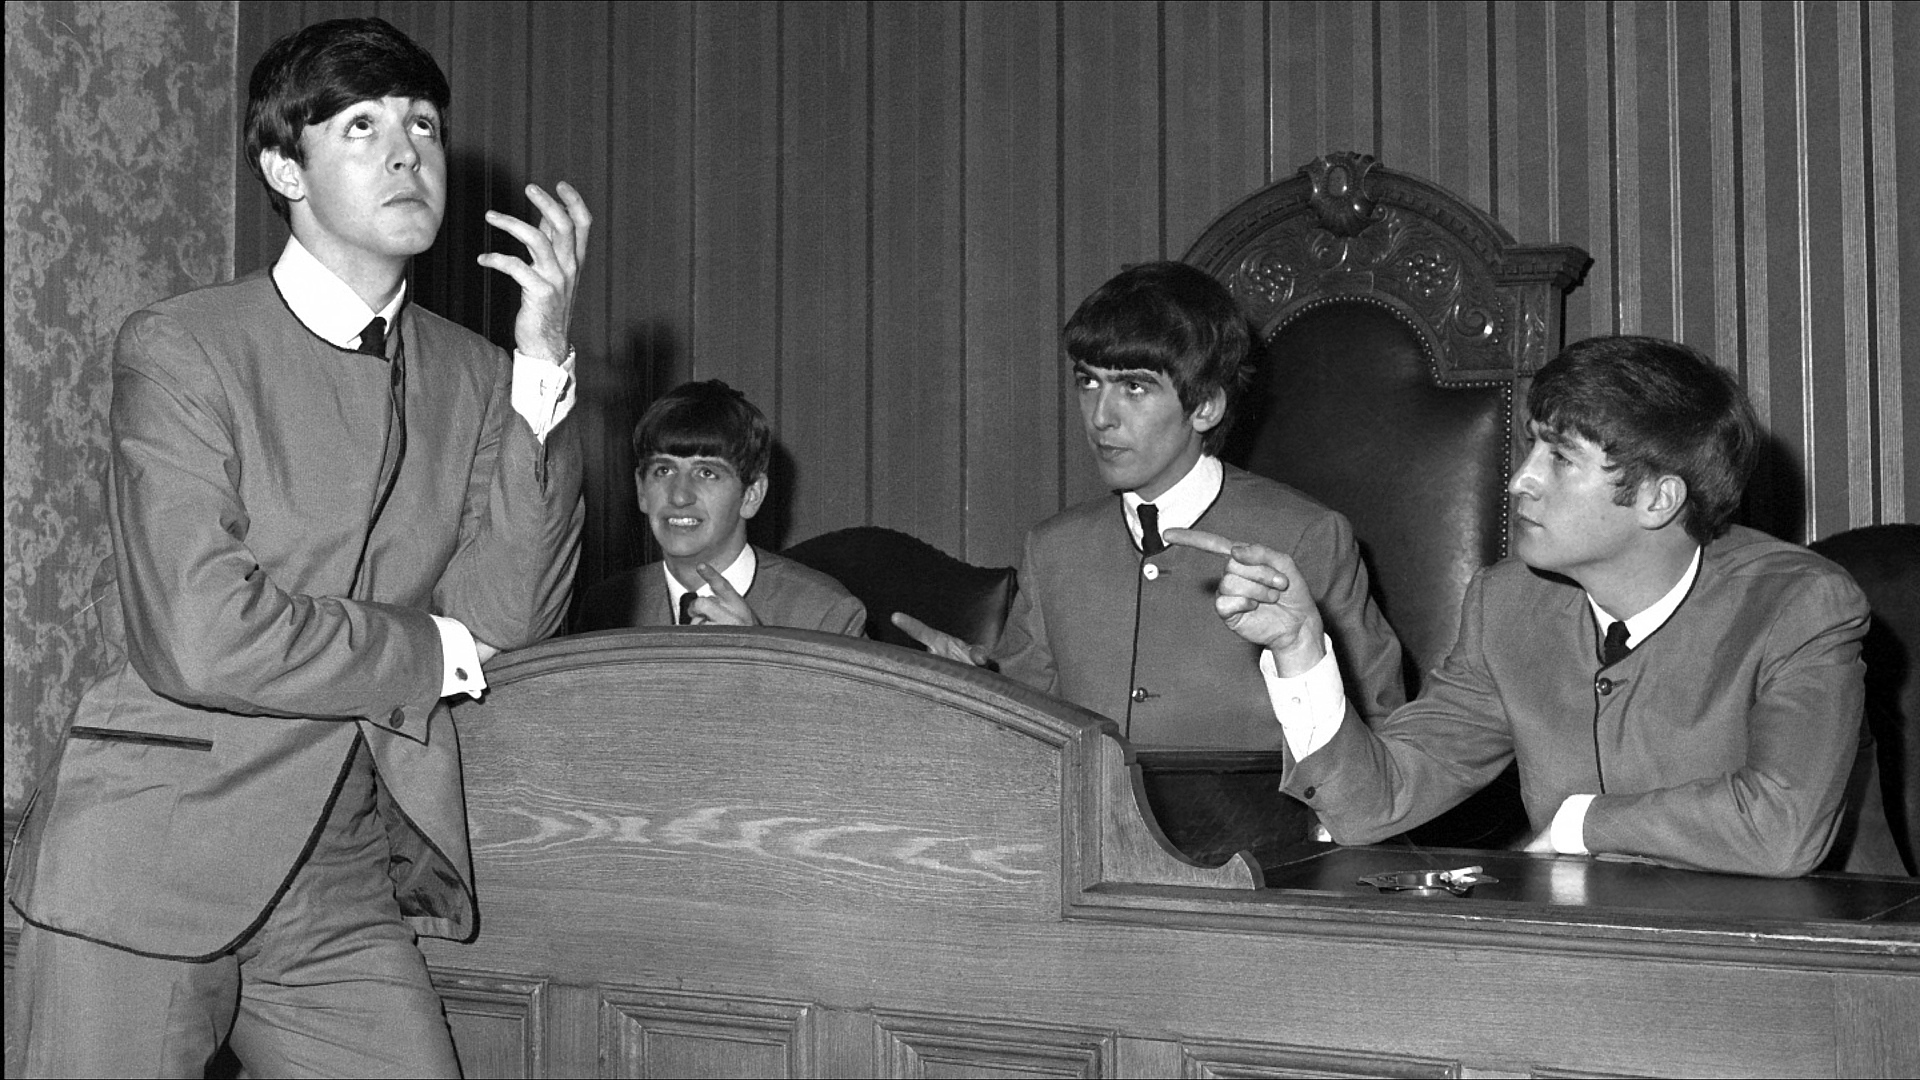 The Beatles John Lennon Paul McCartney Ringo Starr George Harrison 1920x1080